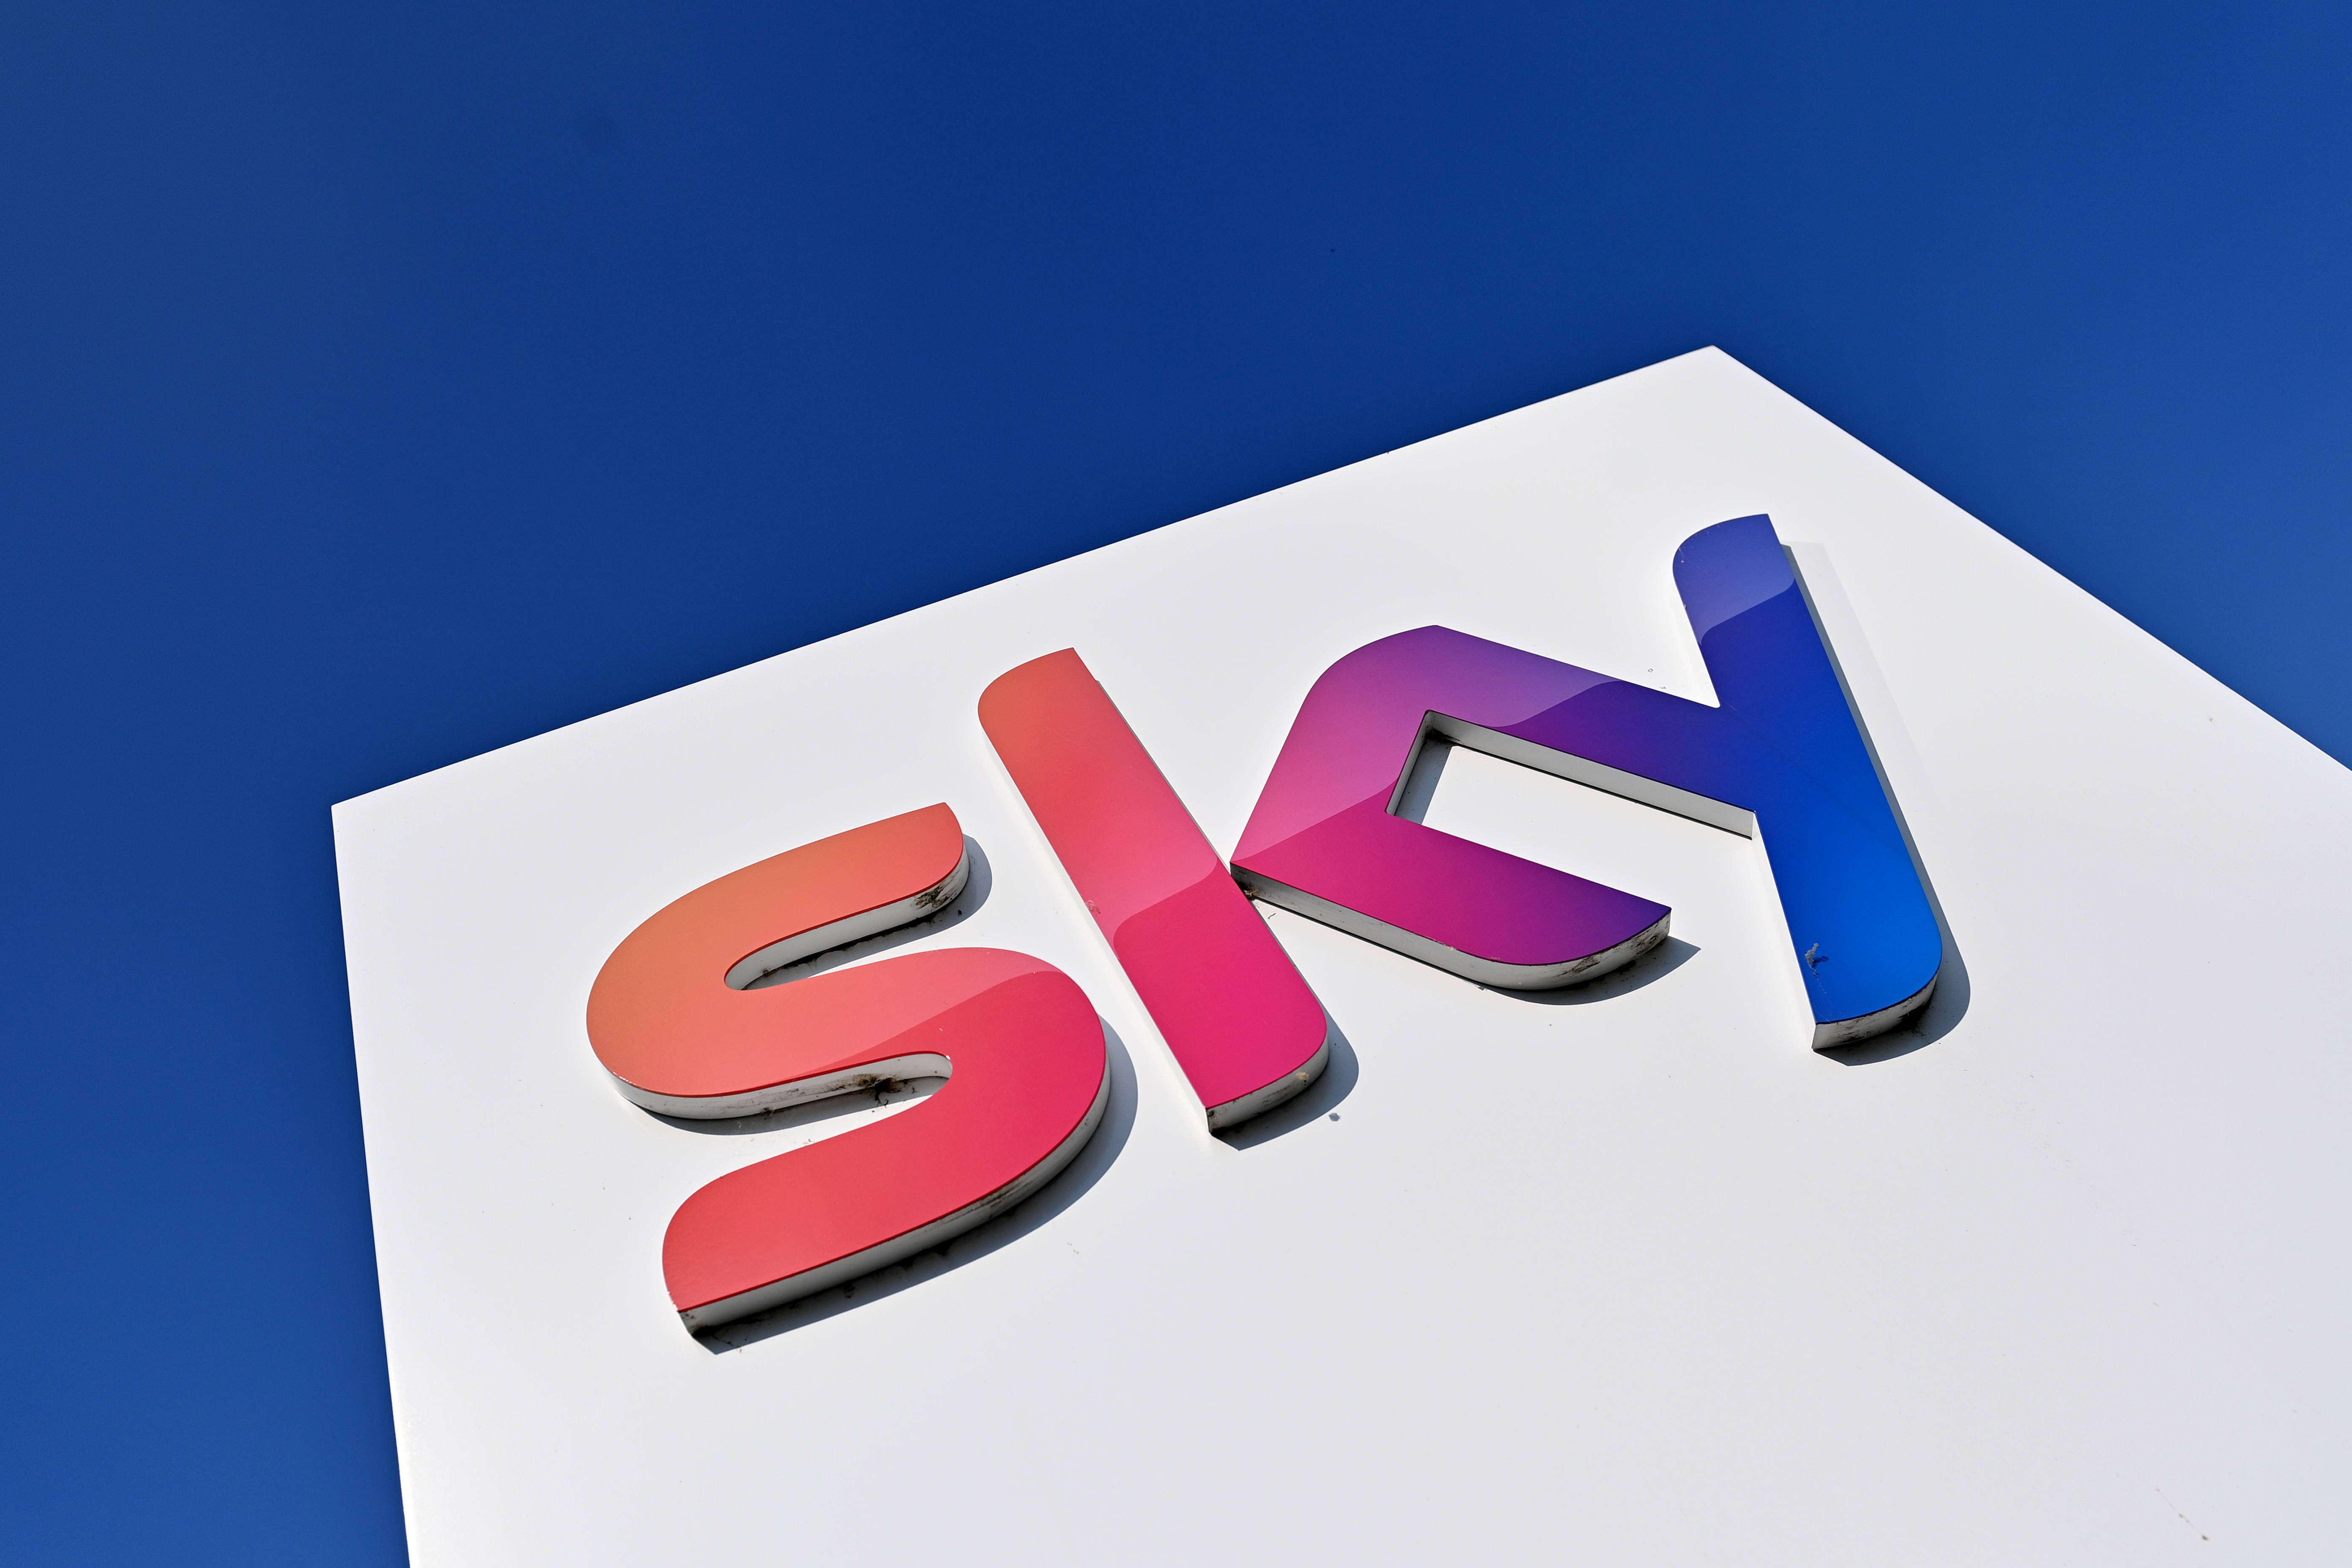 Sky Extra Wo sieht man aktuelle Gewinnspiele and Gewinner?